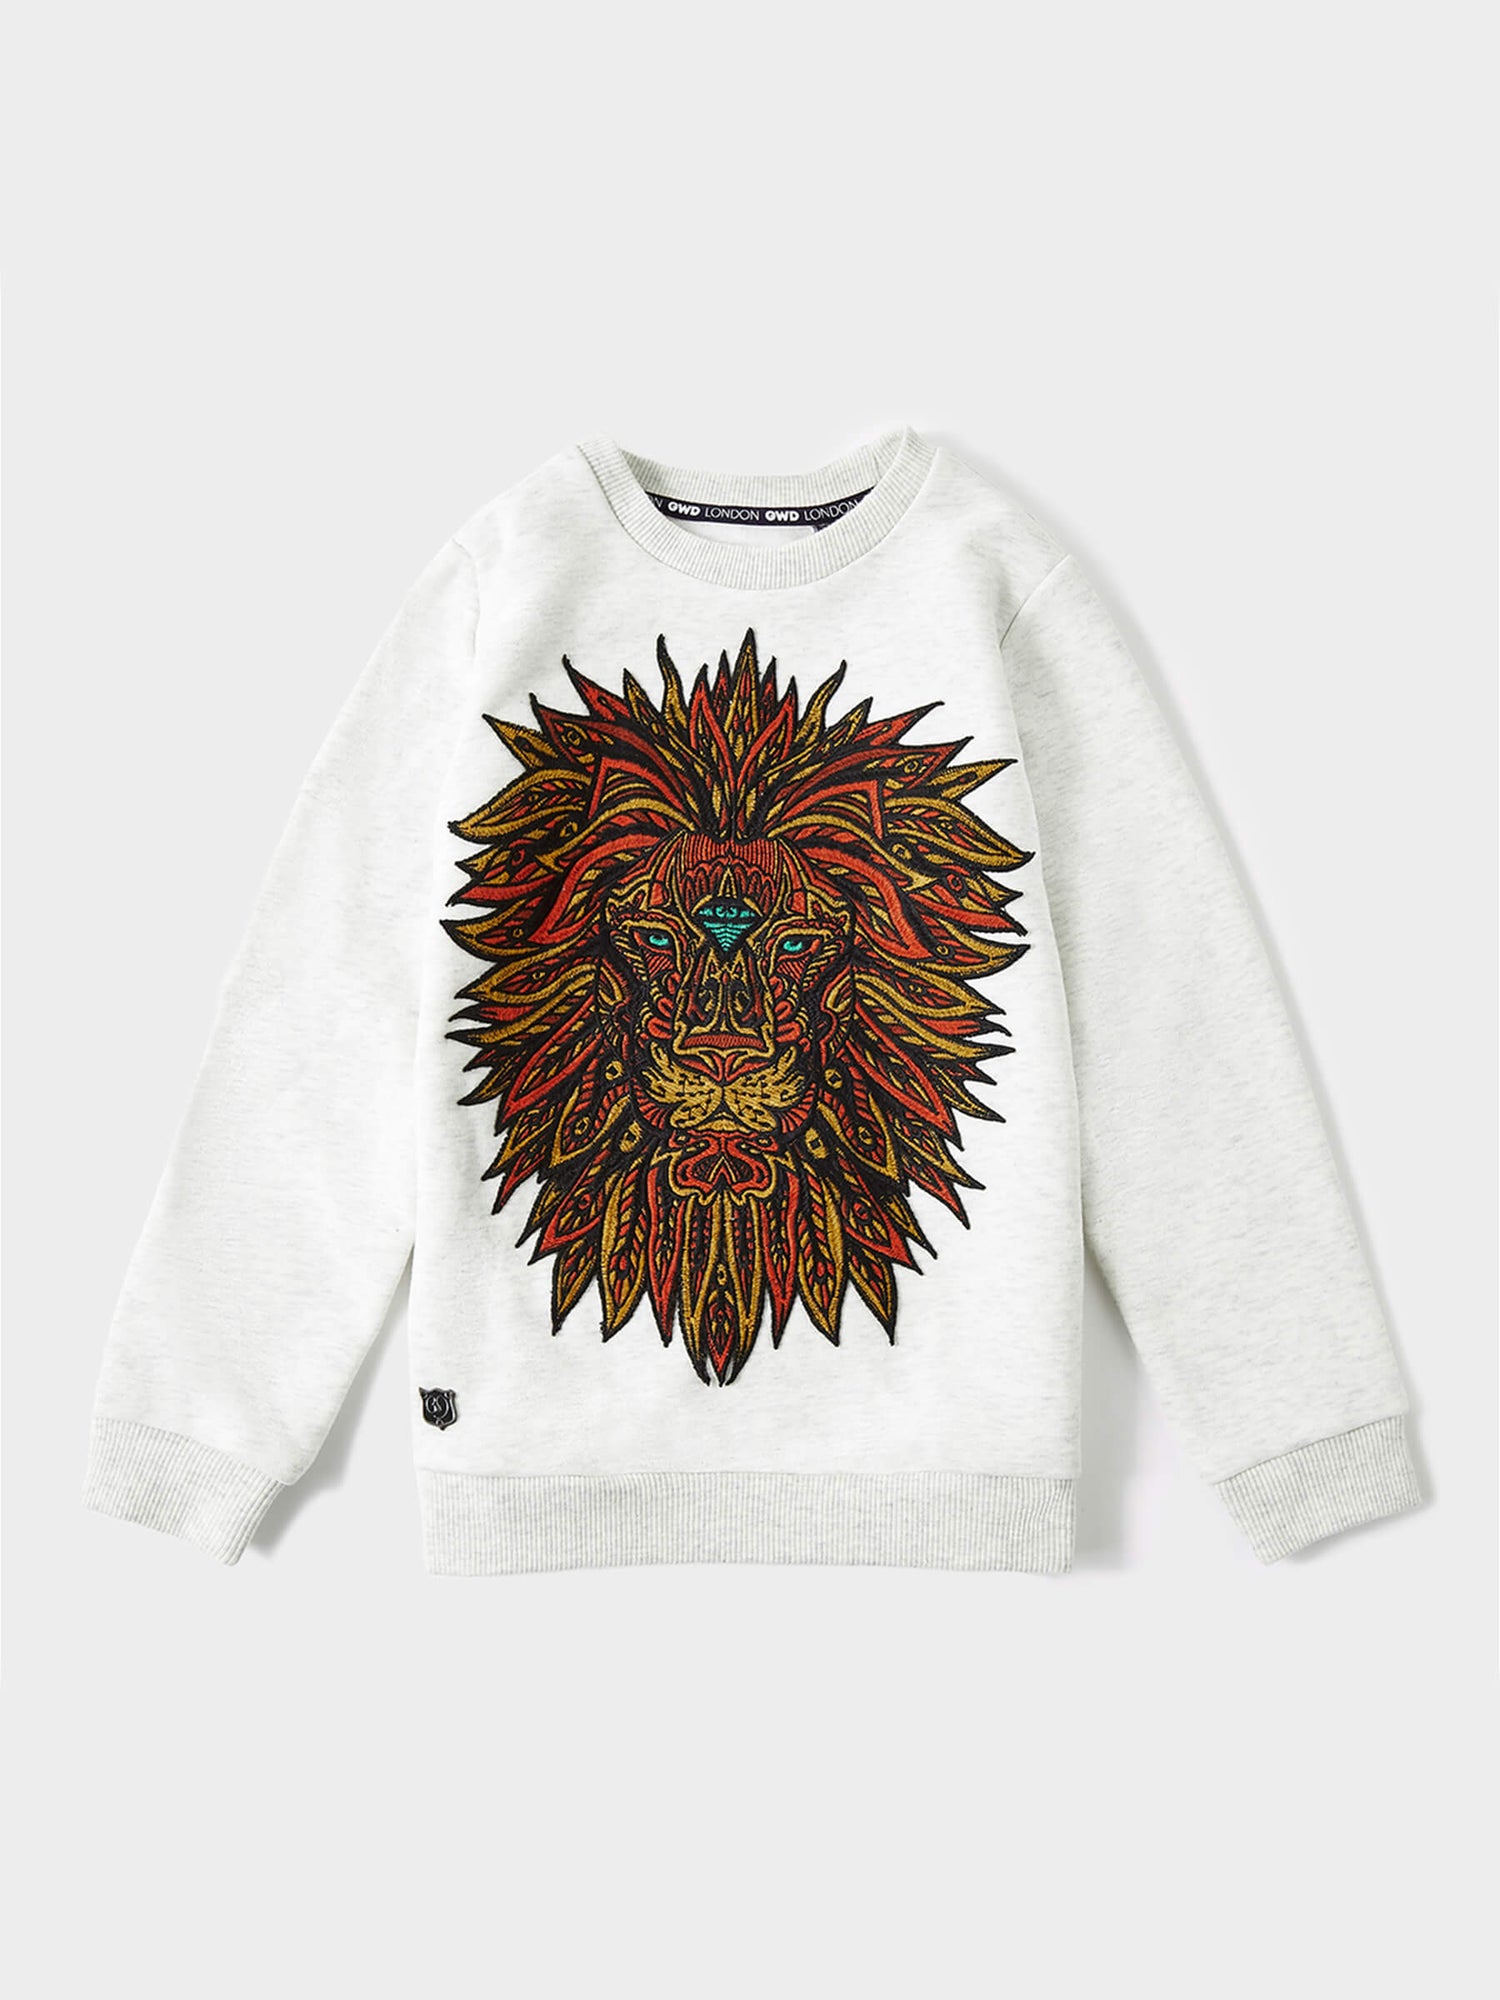 Simba Embroidered Lion Sweatshirt